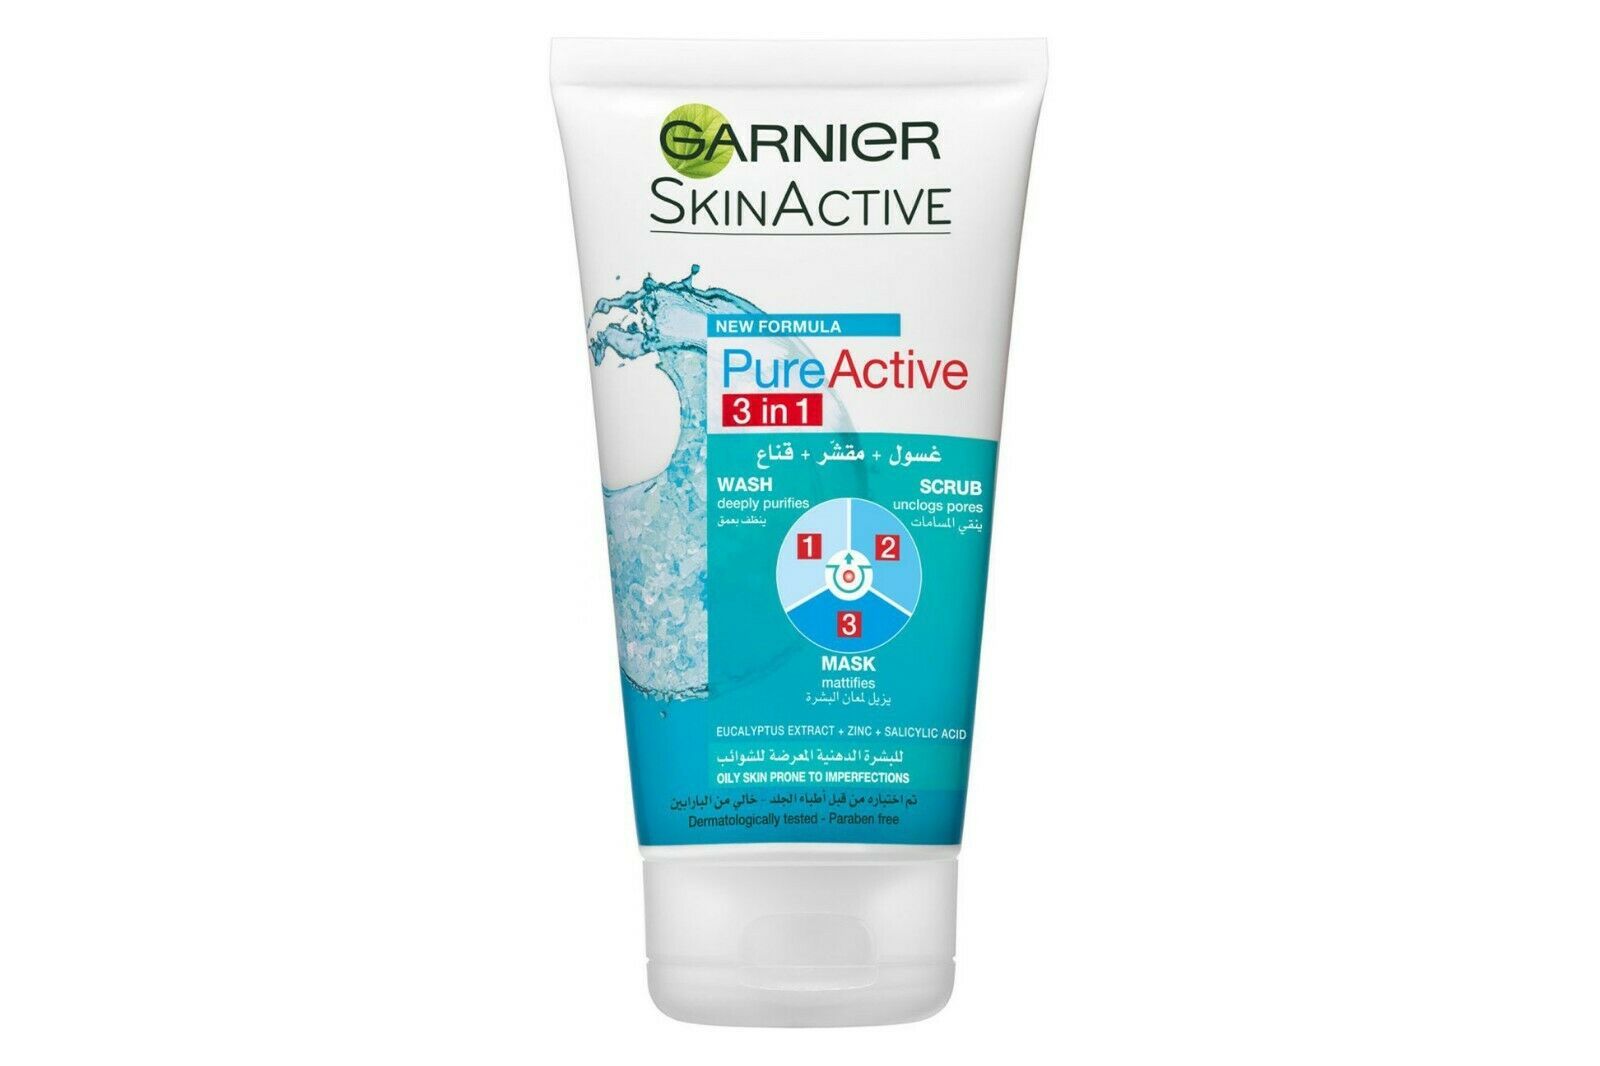 150ml, Garnier Skin Naturals Pure Active 3 in 1 Face Cream - Wash / Scrub / Mask - $23.65